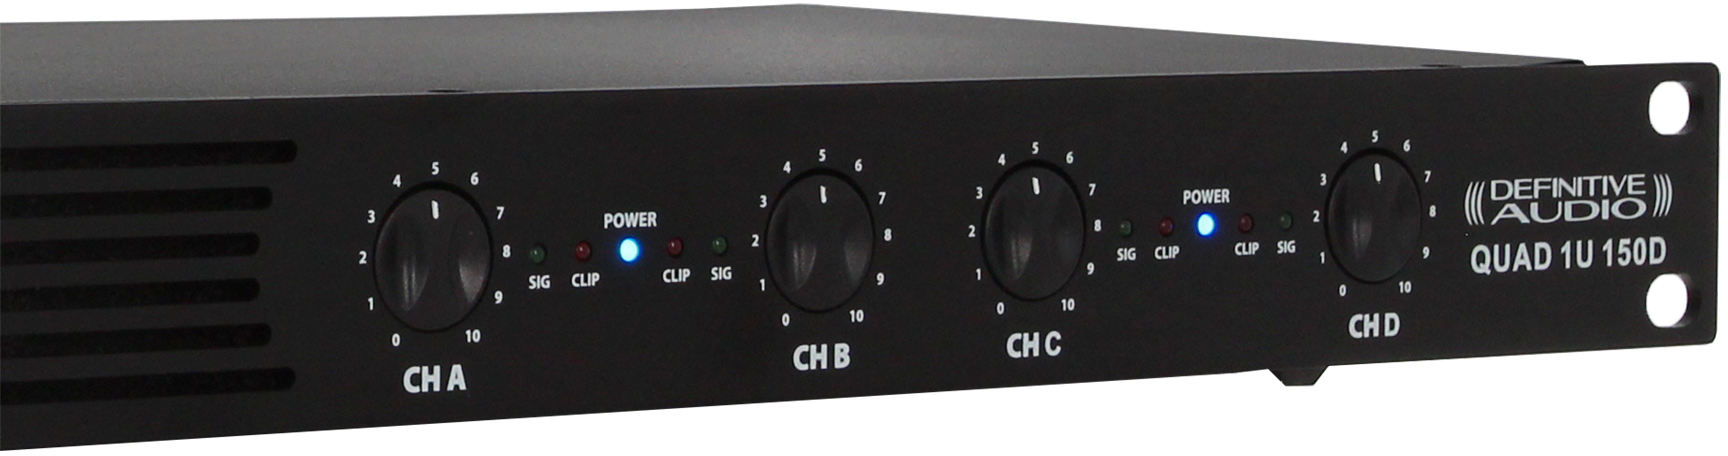 Definitive Audio Quad 1u 150d - Multi-kanalen krachtversterker - Variation 3